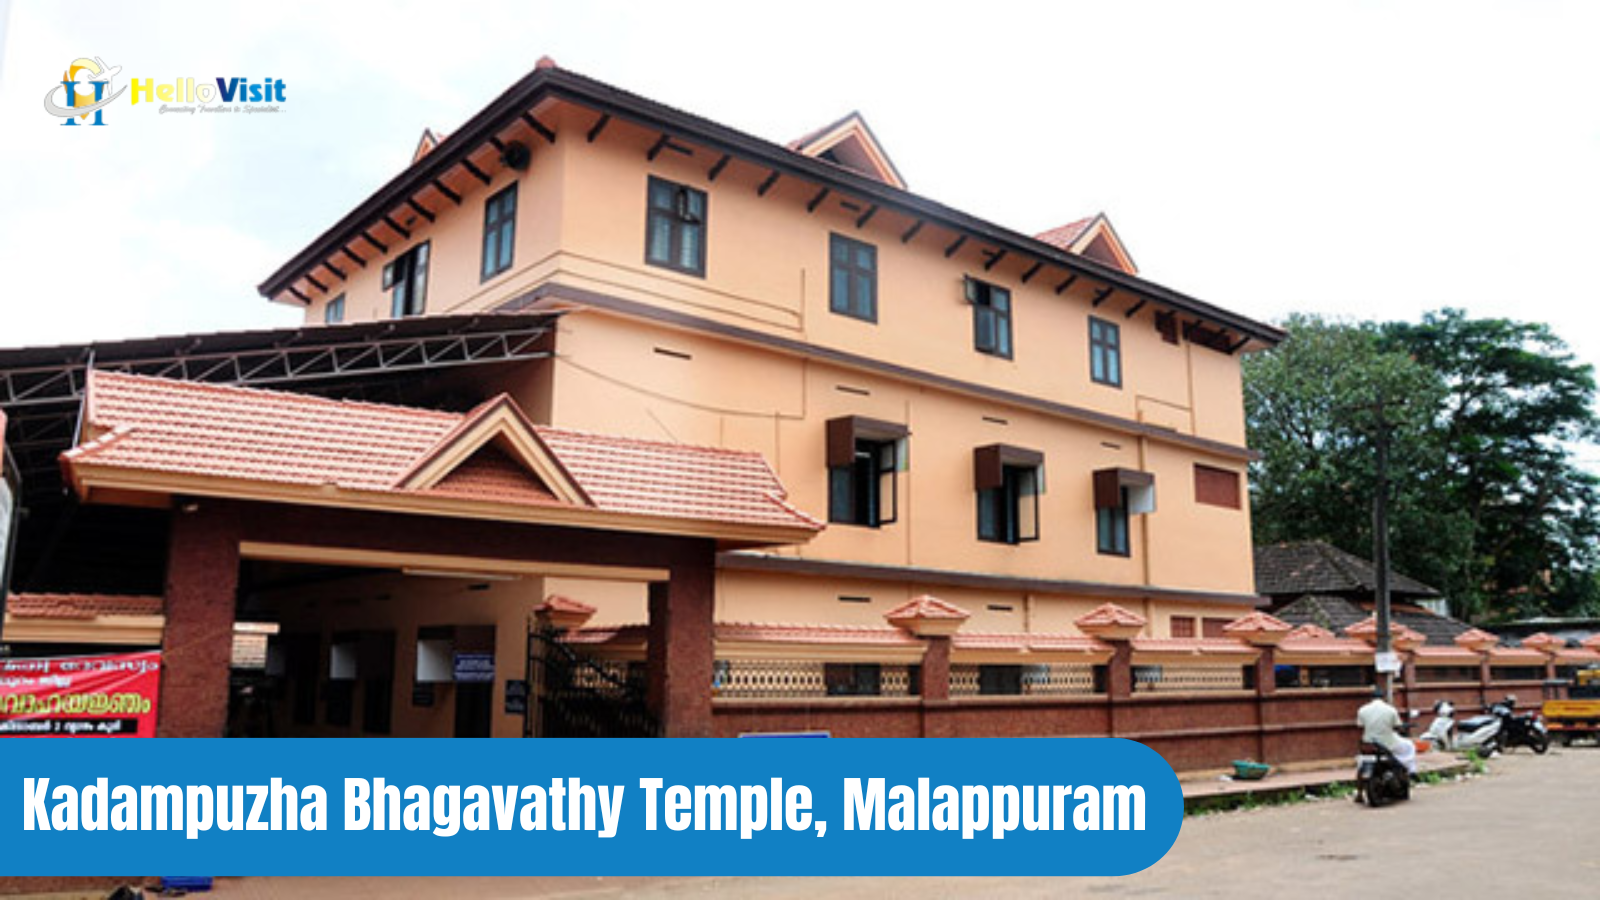 Kadampuzha Bhagavathy Temple, Malappuram